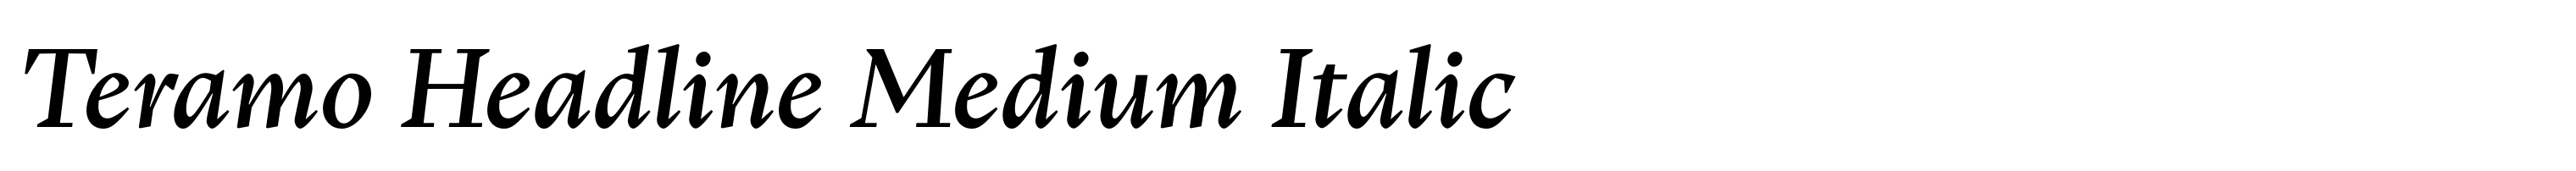 Teramo Headline Medium Italic